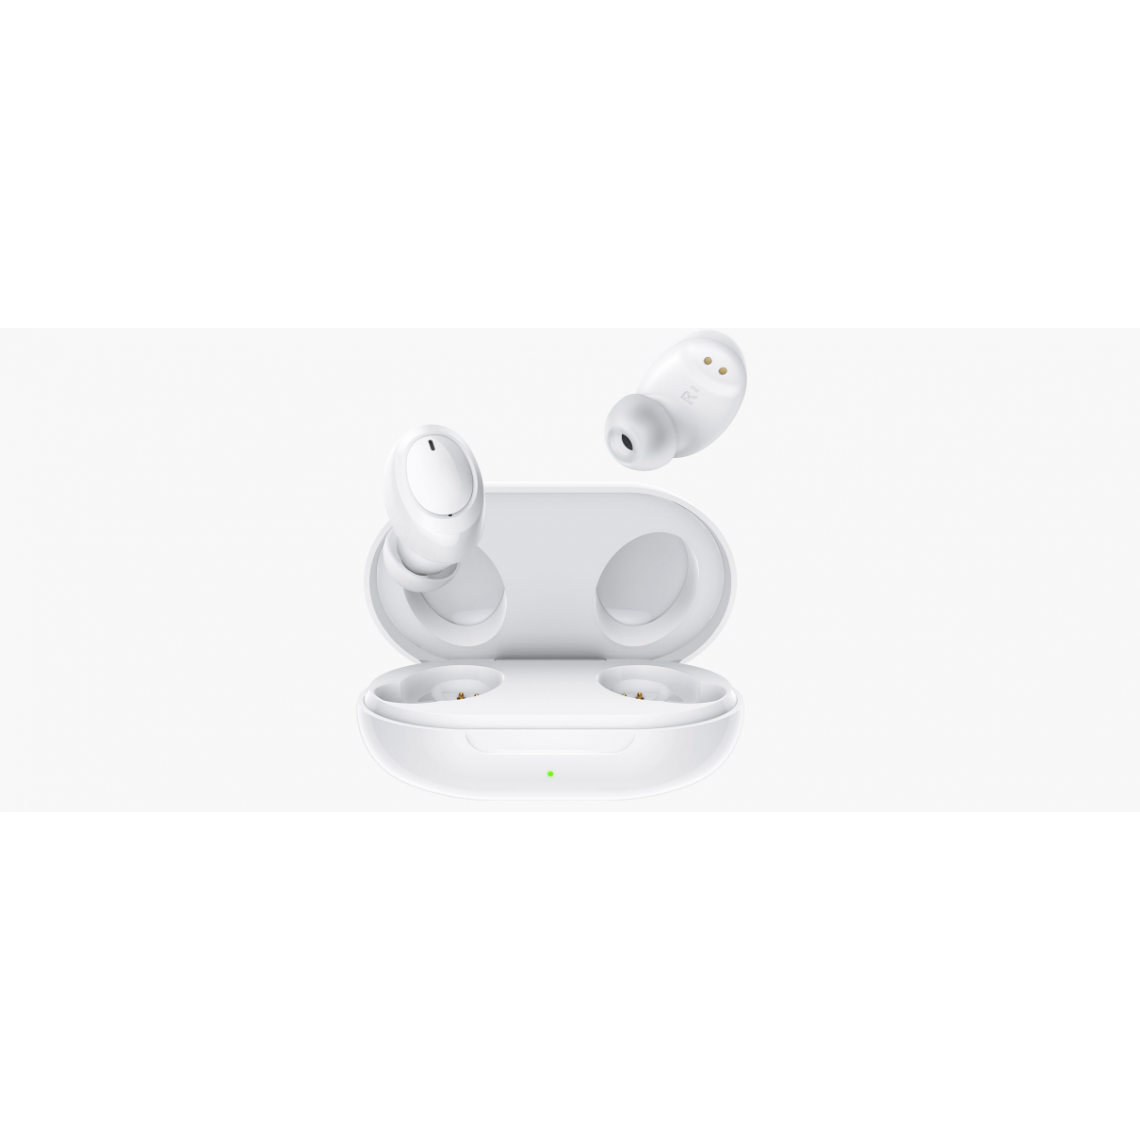 Universal - Casque sans fil, casque Bluetooth, résistance à l'eau, casque Bluetooth.(blanche) - Casque